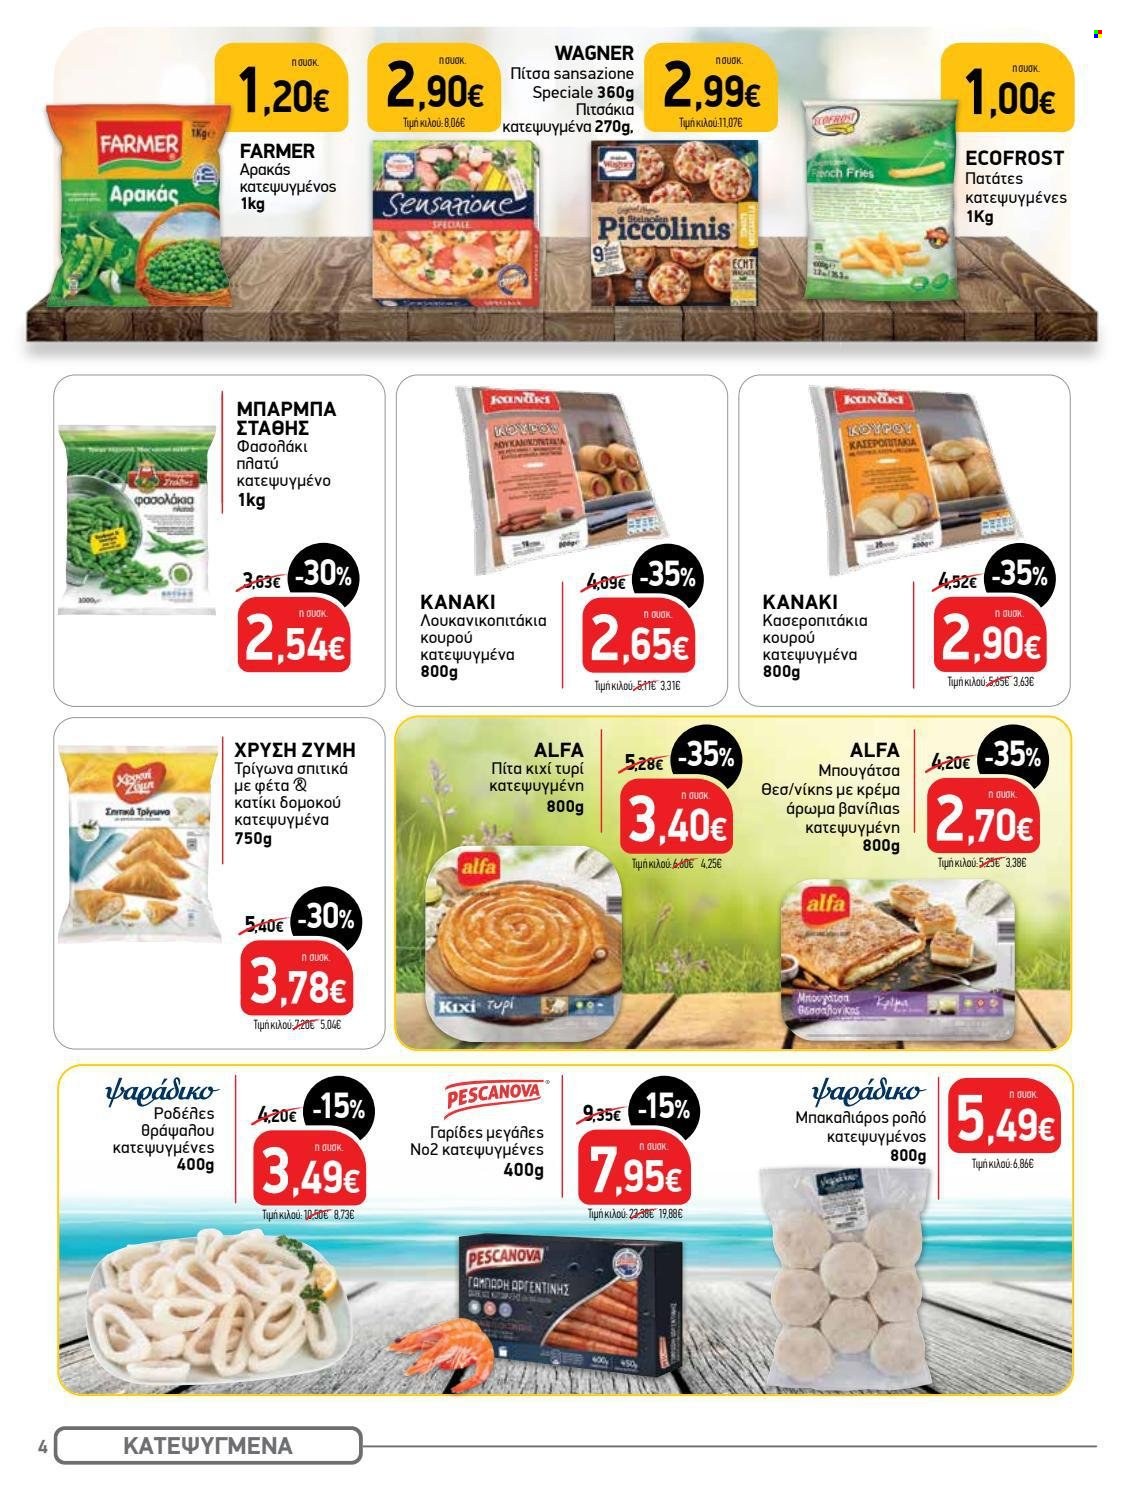 thumbnail - Φυλλάδια Bazaar - 30.09.2021 - 13.10.2021 - Εκπτωτικά προϊόντα - πίτα, ζύμη, αρακάς, πατάτες, γαρίδες, μπακαλιαρος, ρολό. Σελίδα 4.